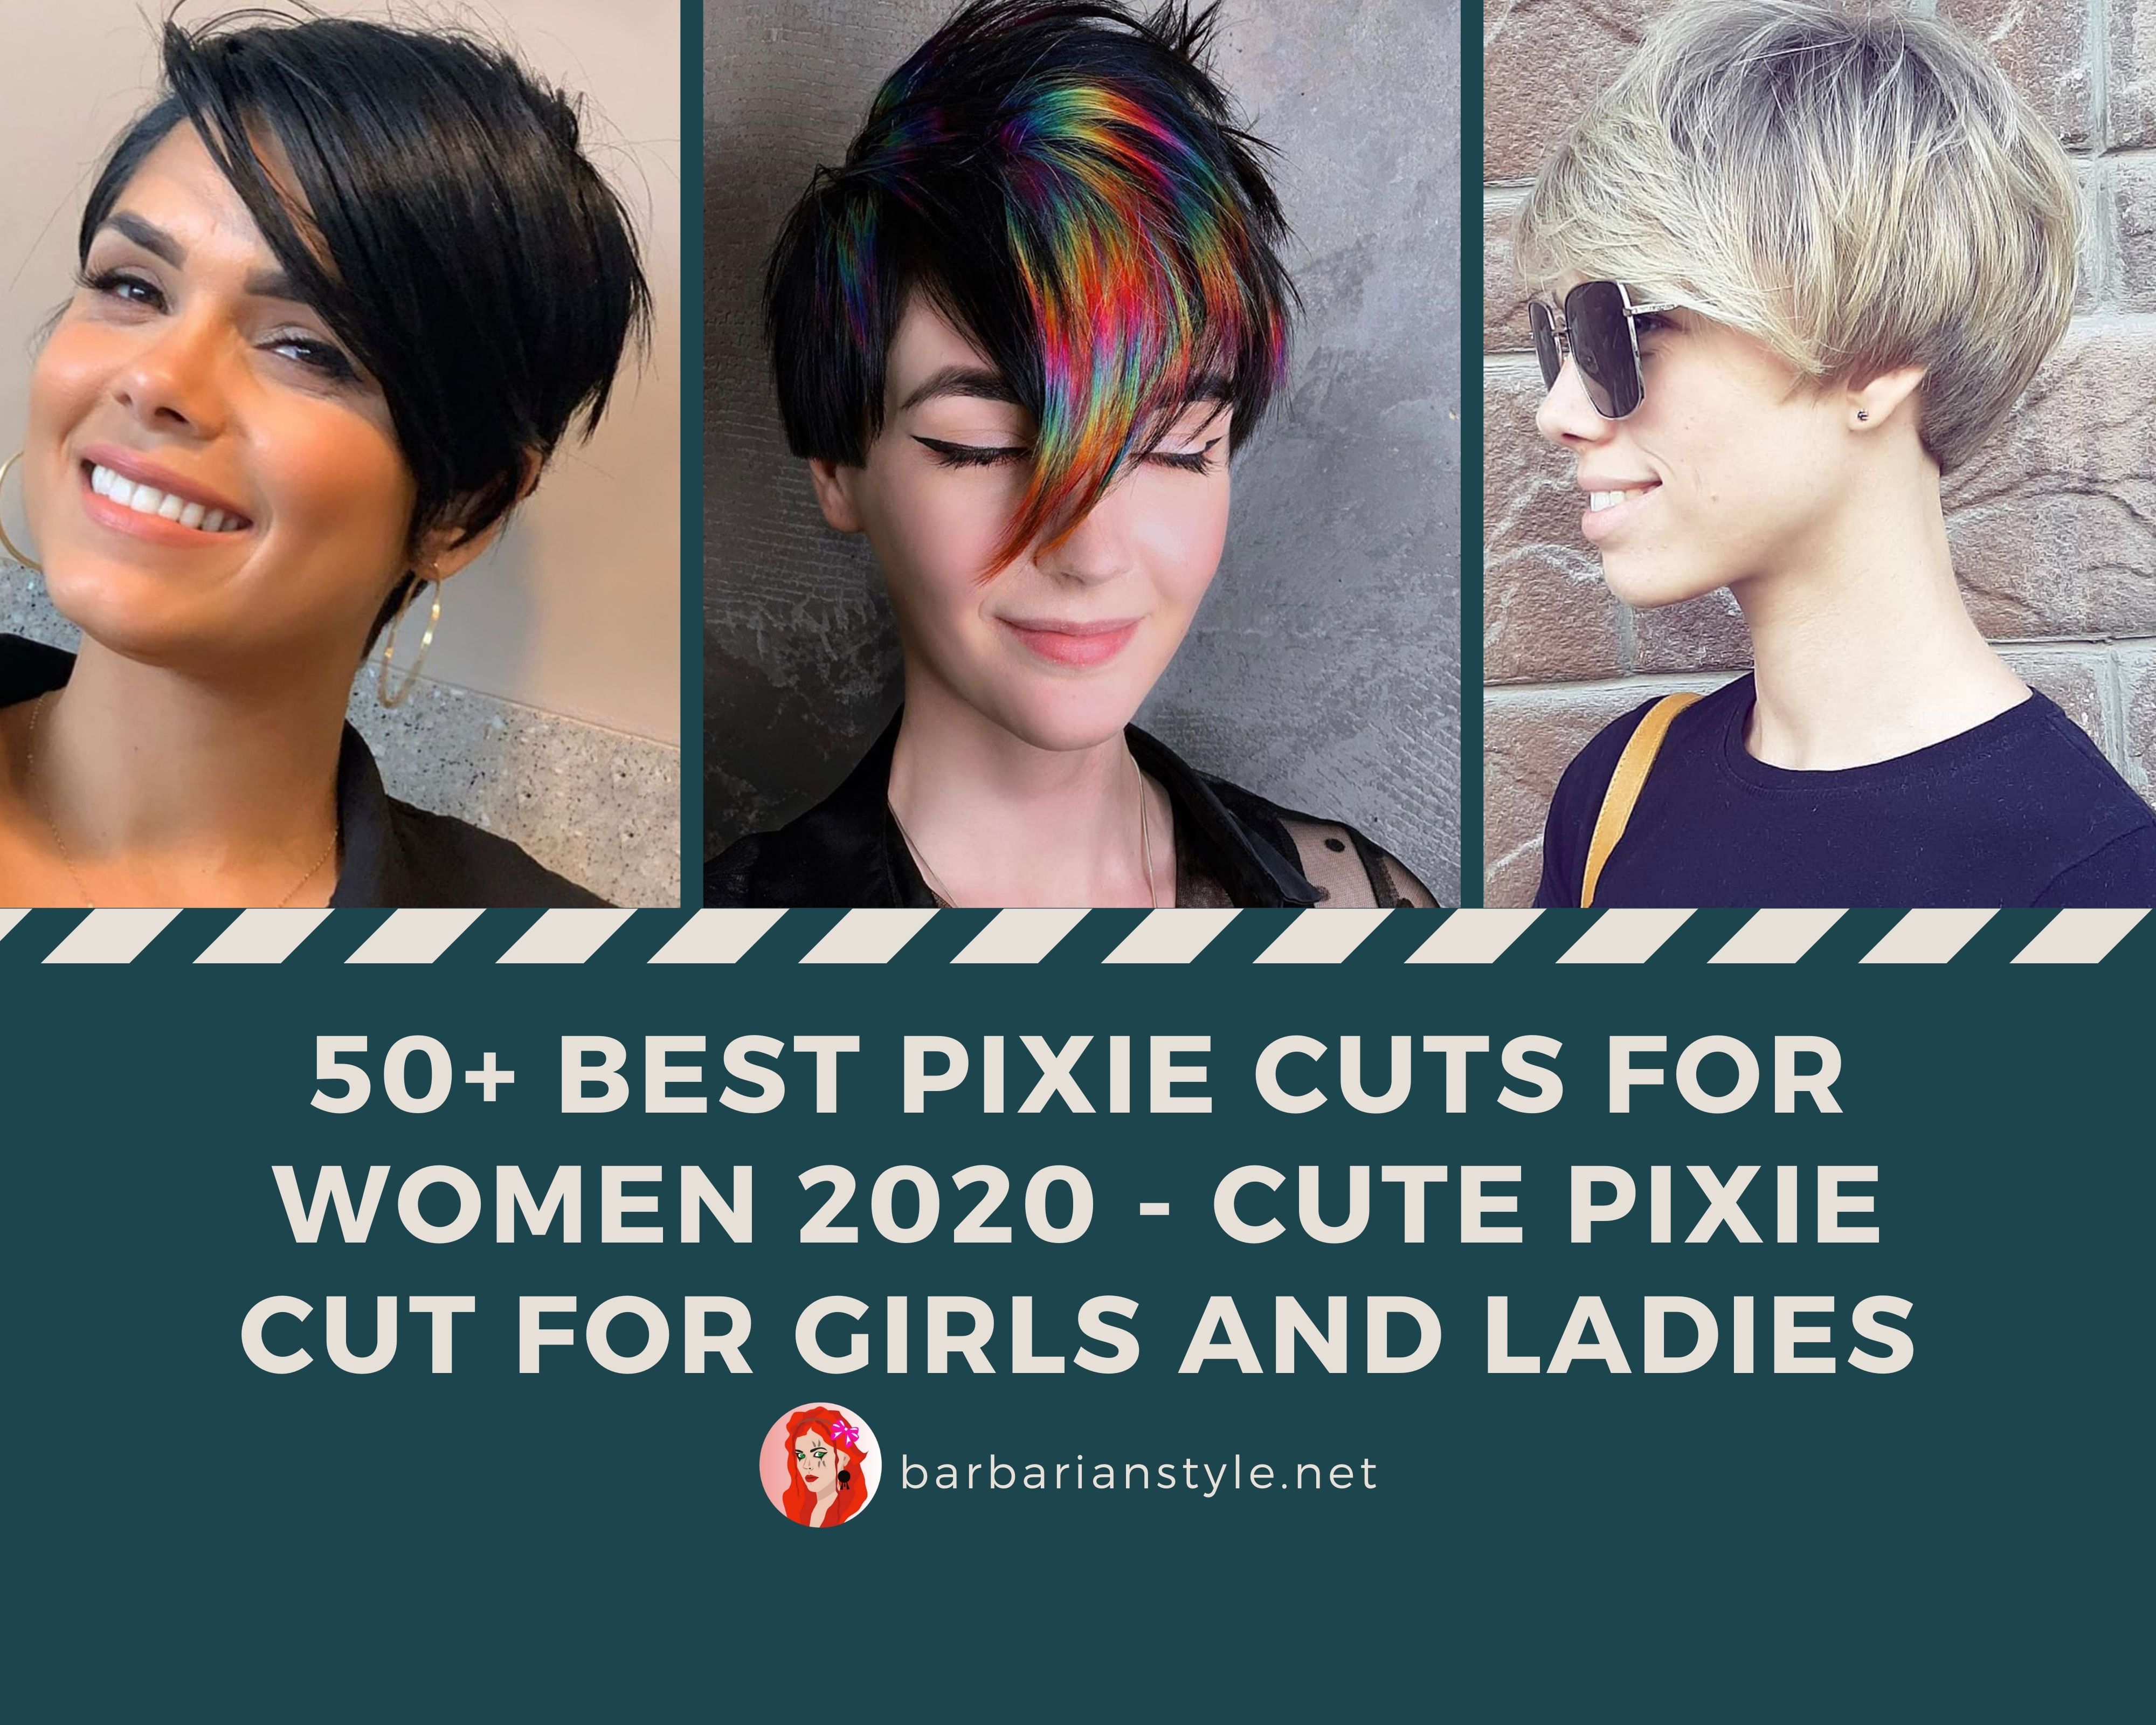 6 Cute Crew Cut Hairstyles for Men